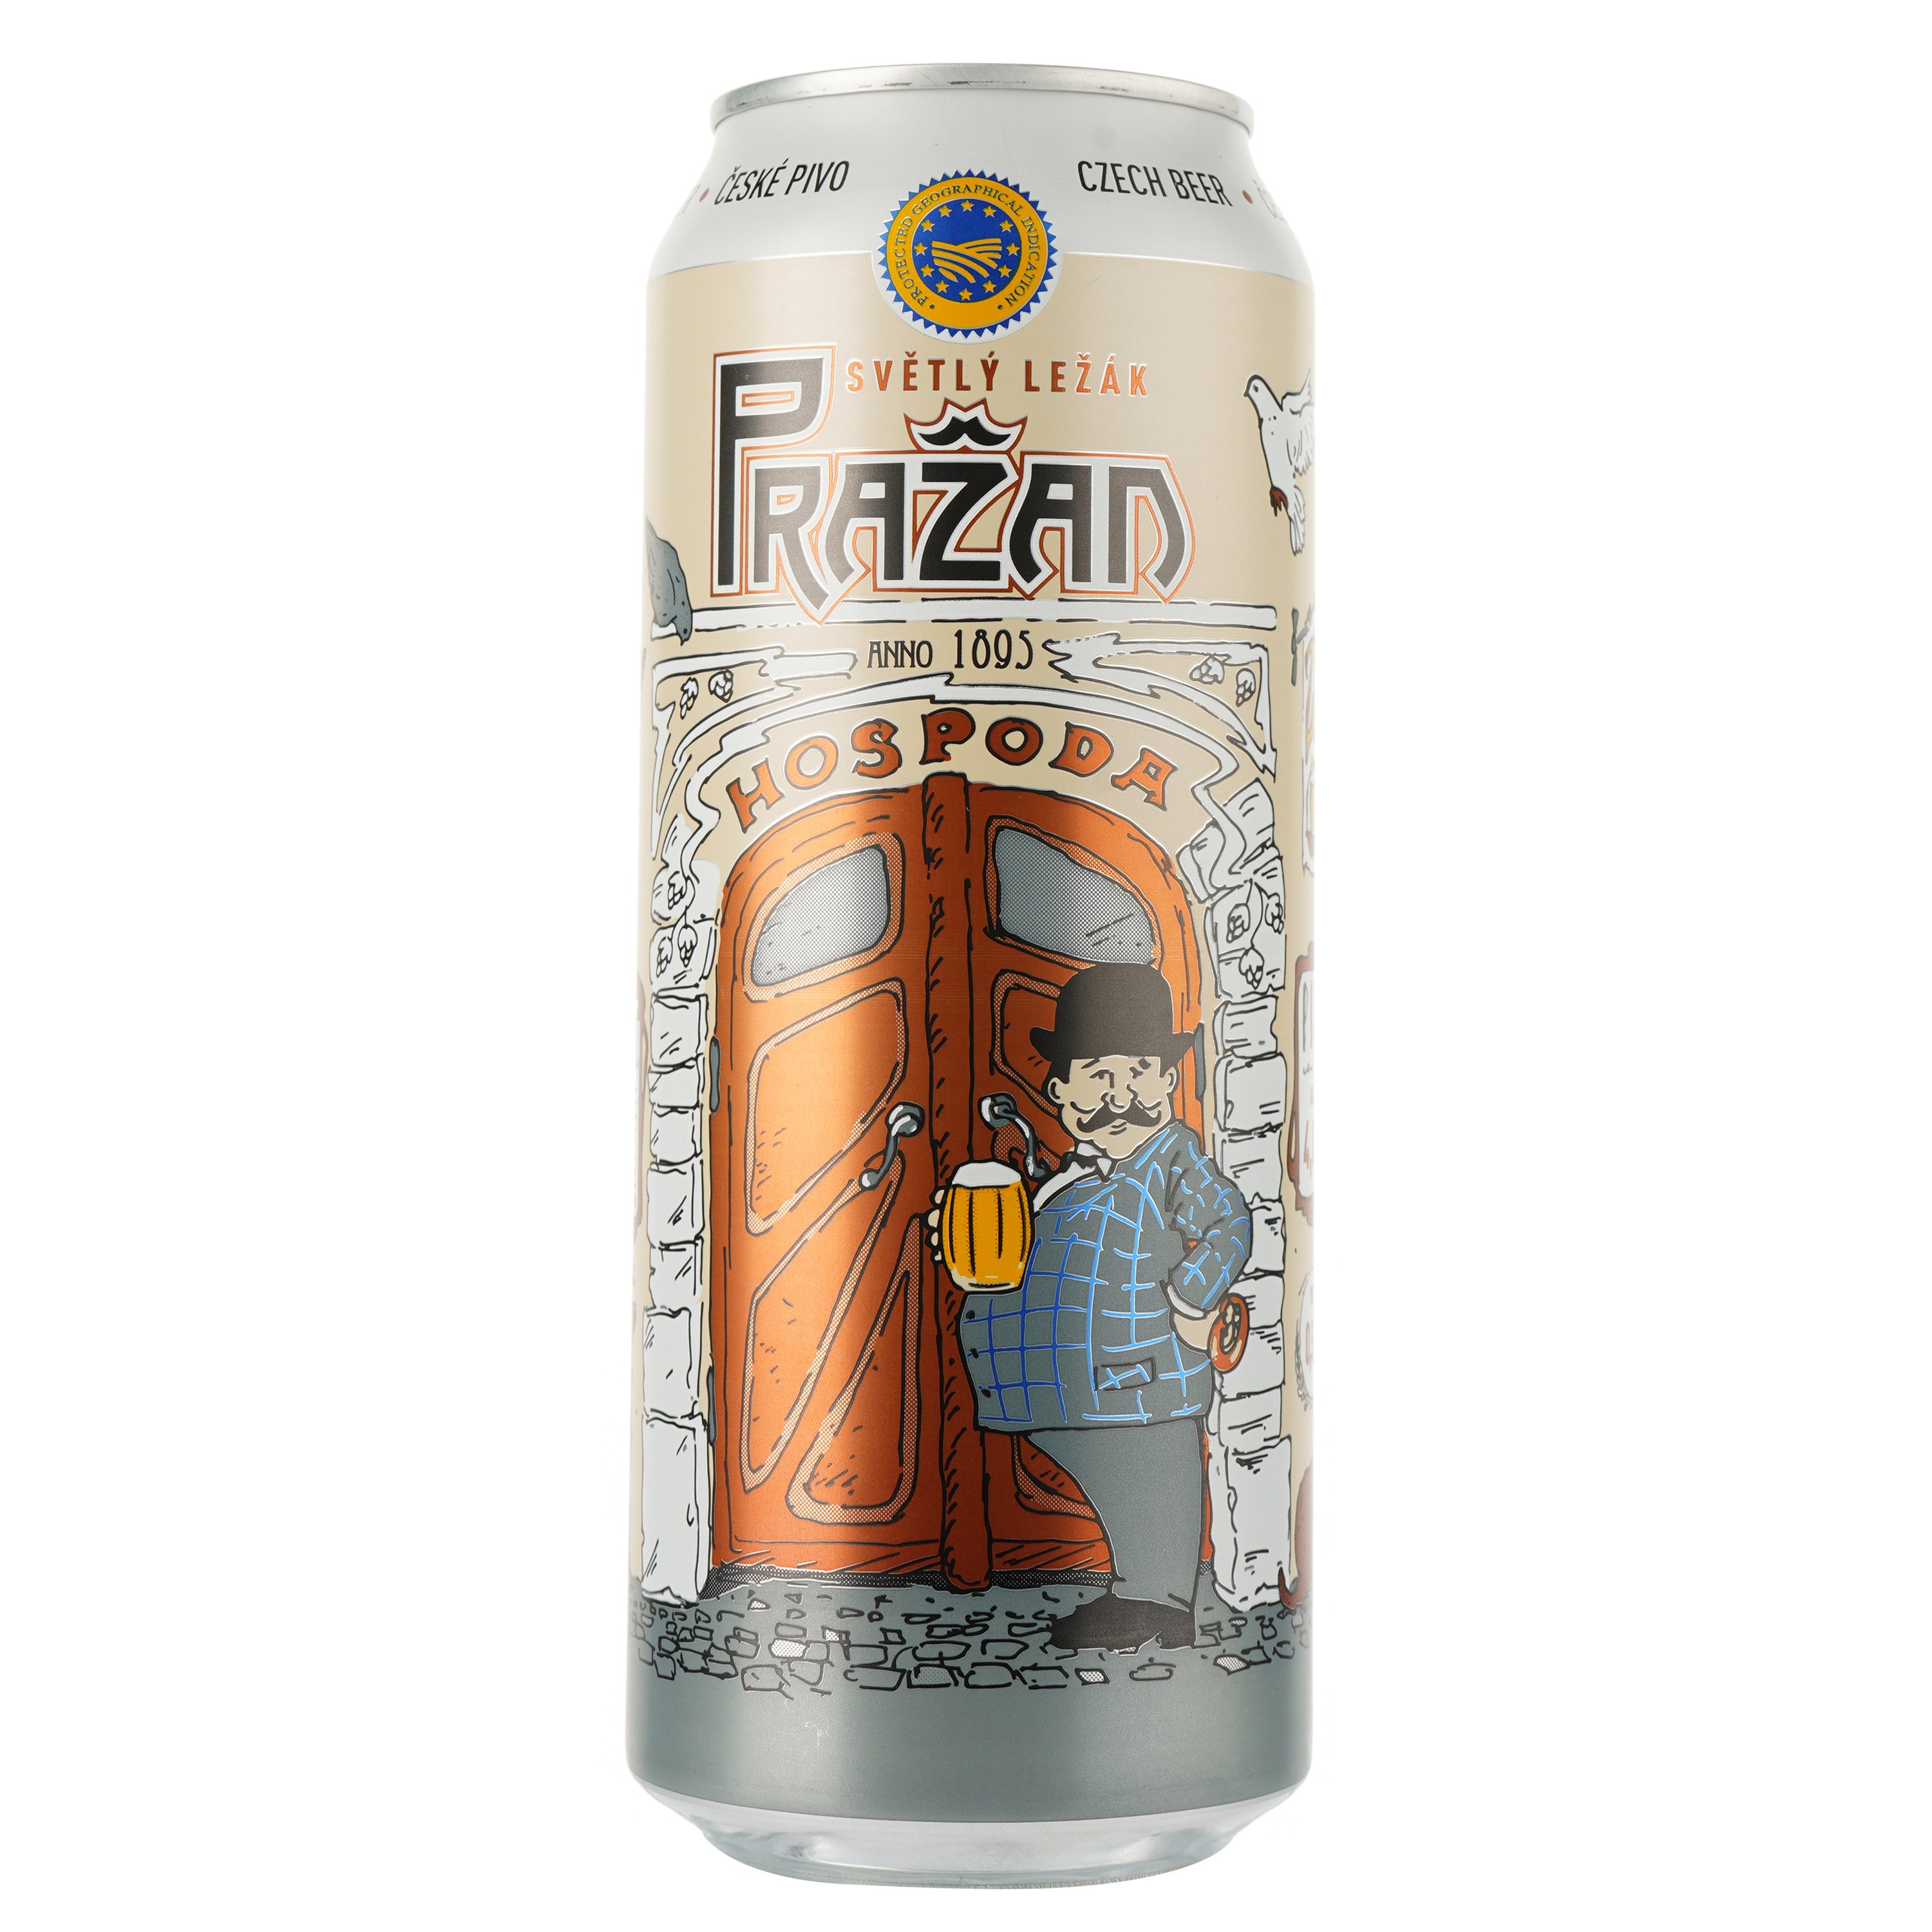 Пиво Prazan светлое, 4.8%, ж/б, 0.5 л - фото 1